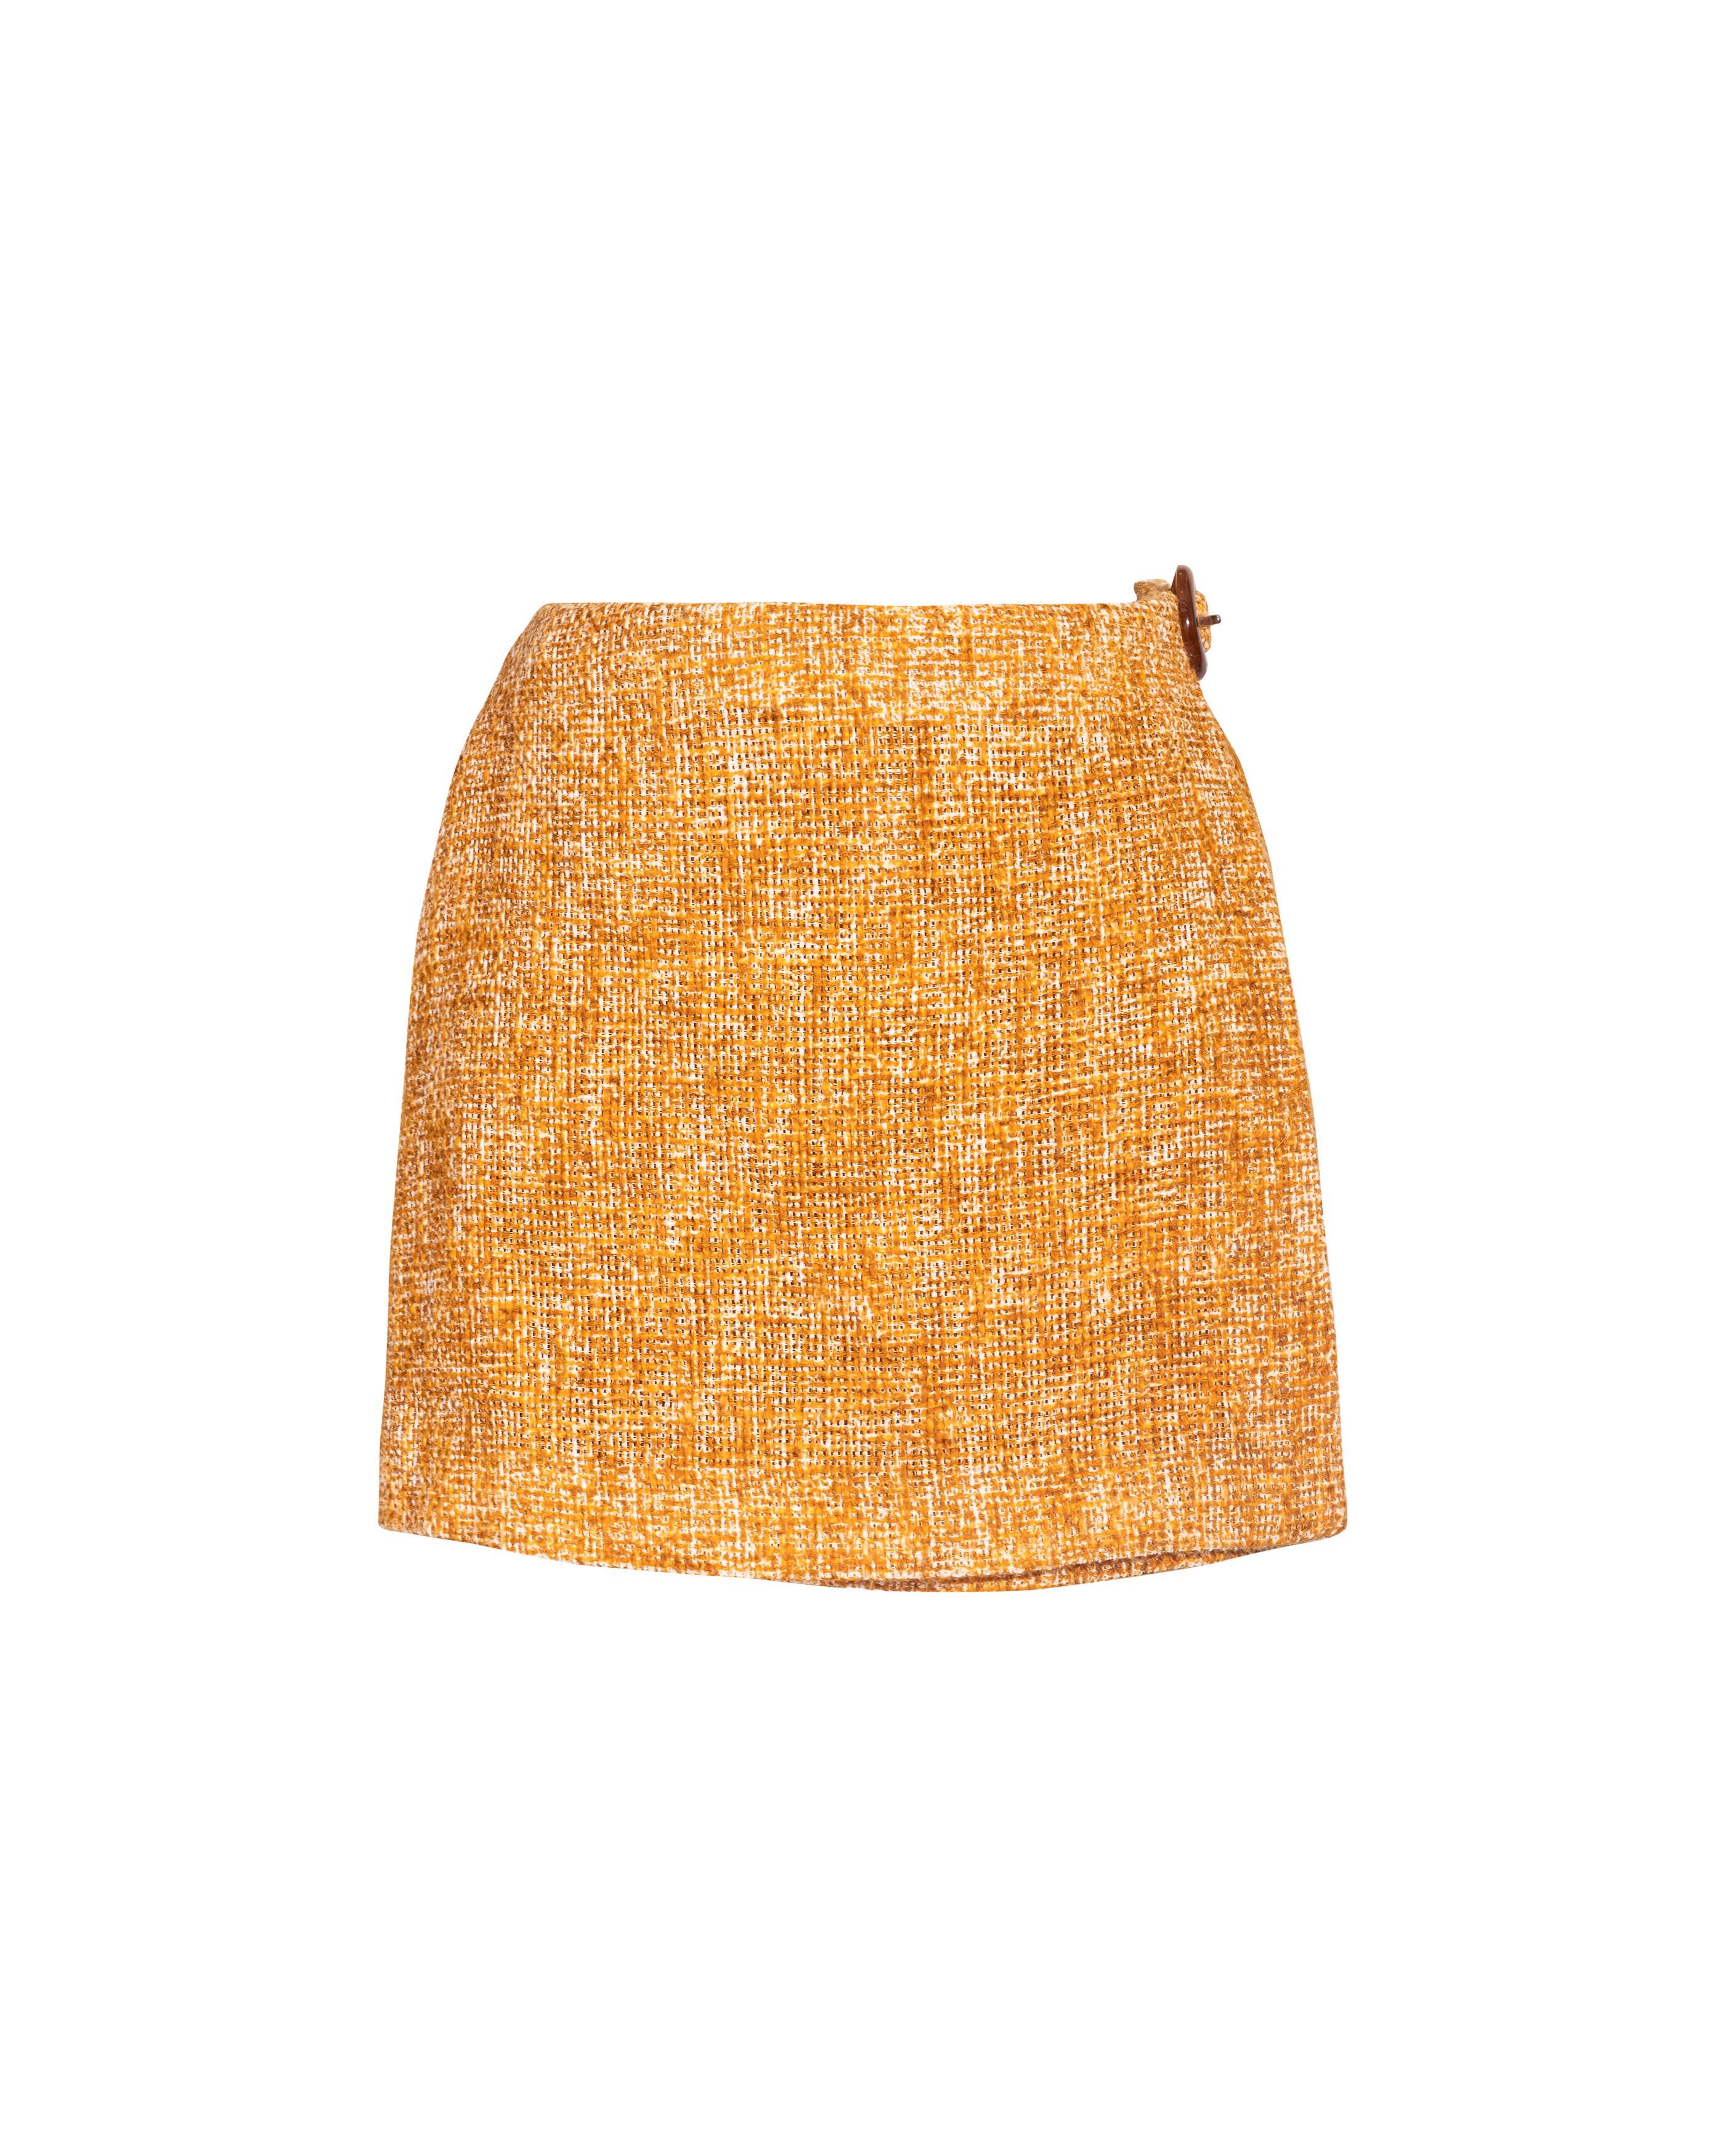 S/S 1996 Prada by Miuccia Prada Orange Tweed Skirt Set 2